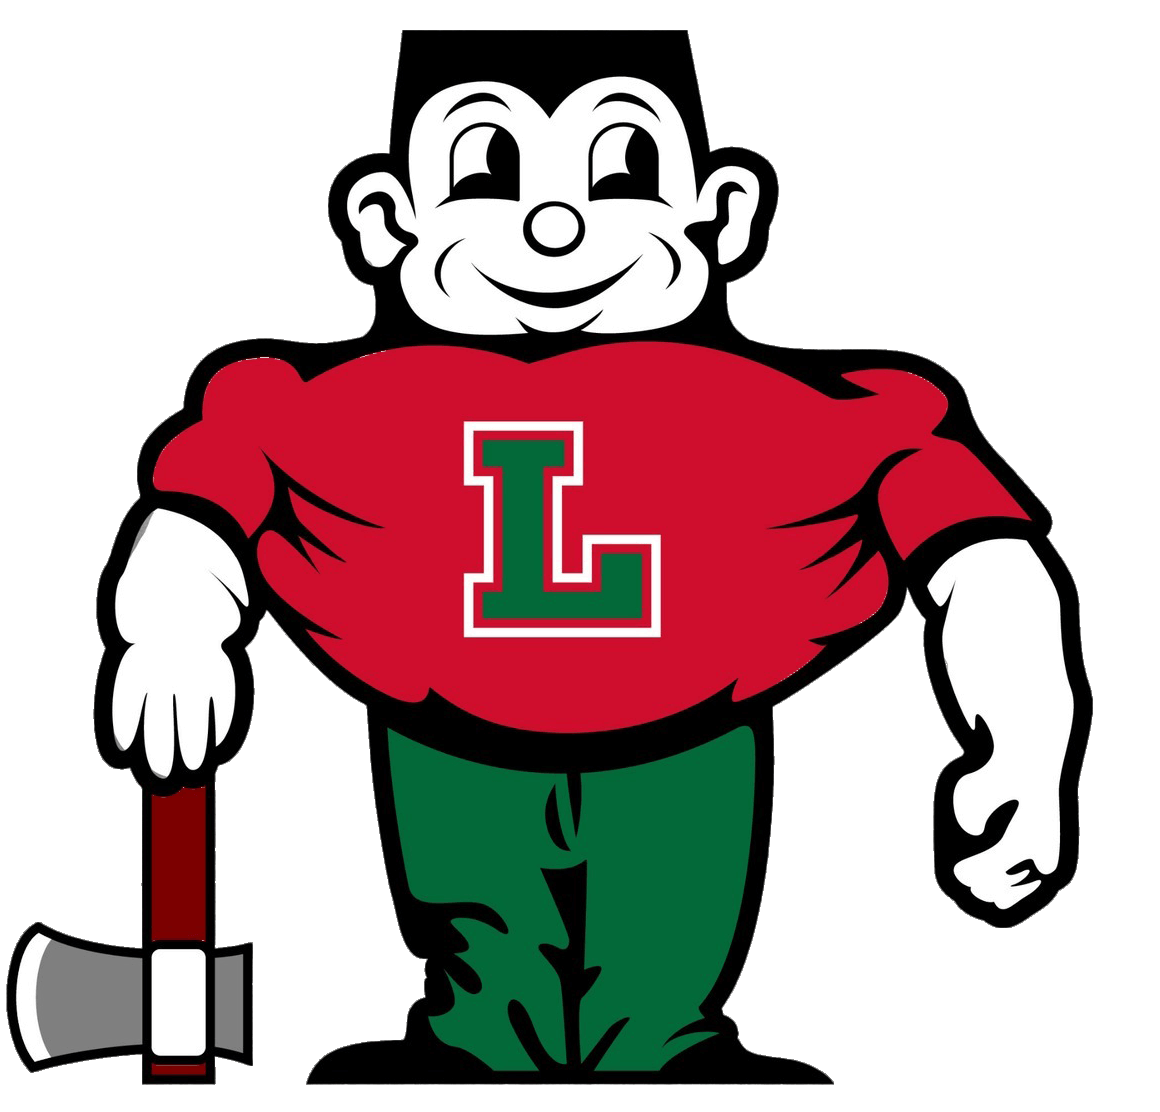 Lincoln High School logo, by Turf Tank